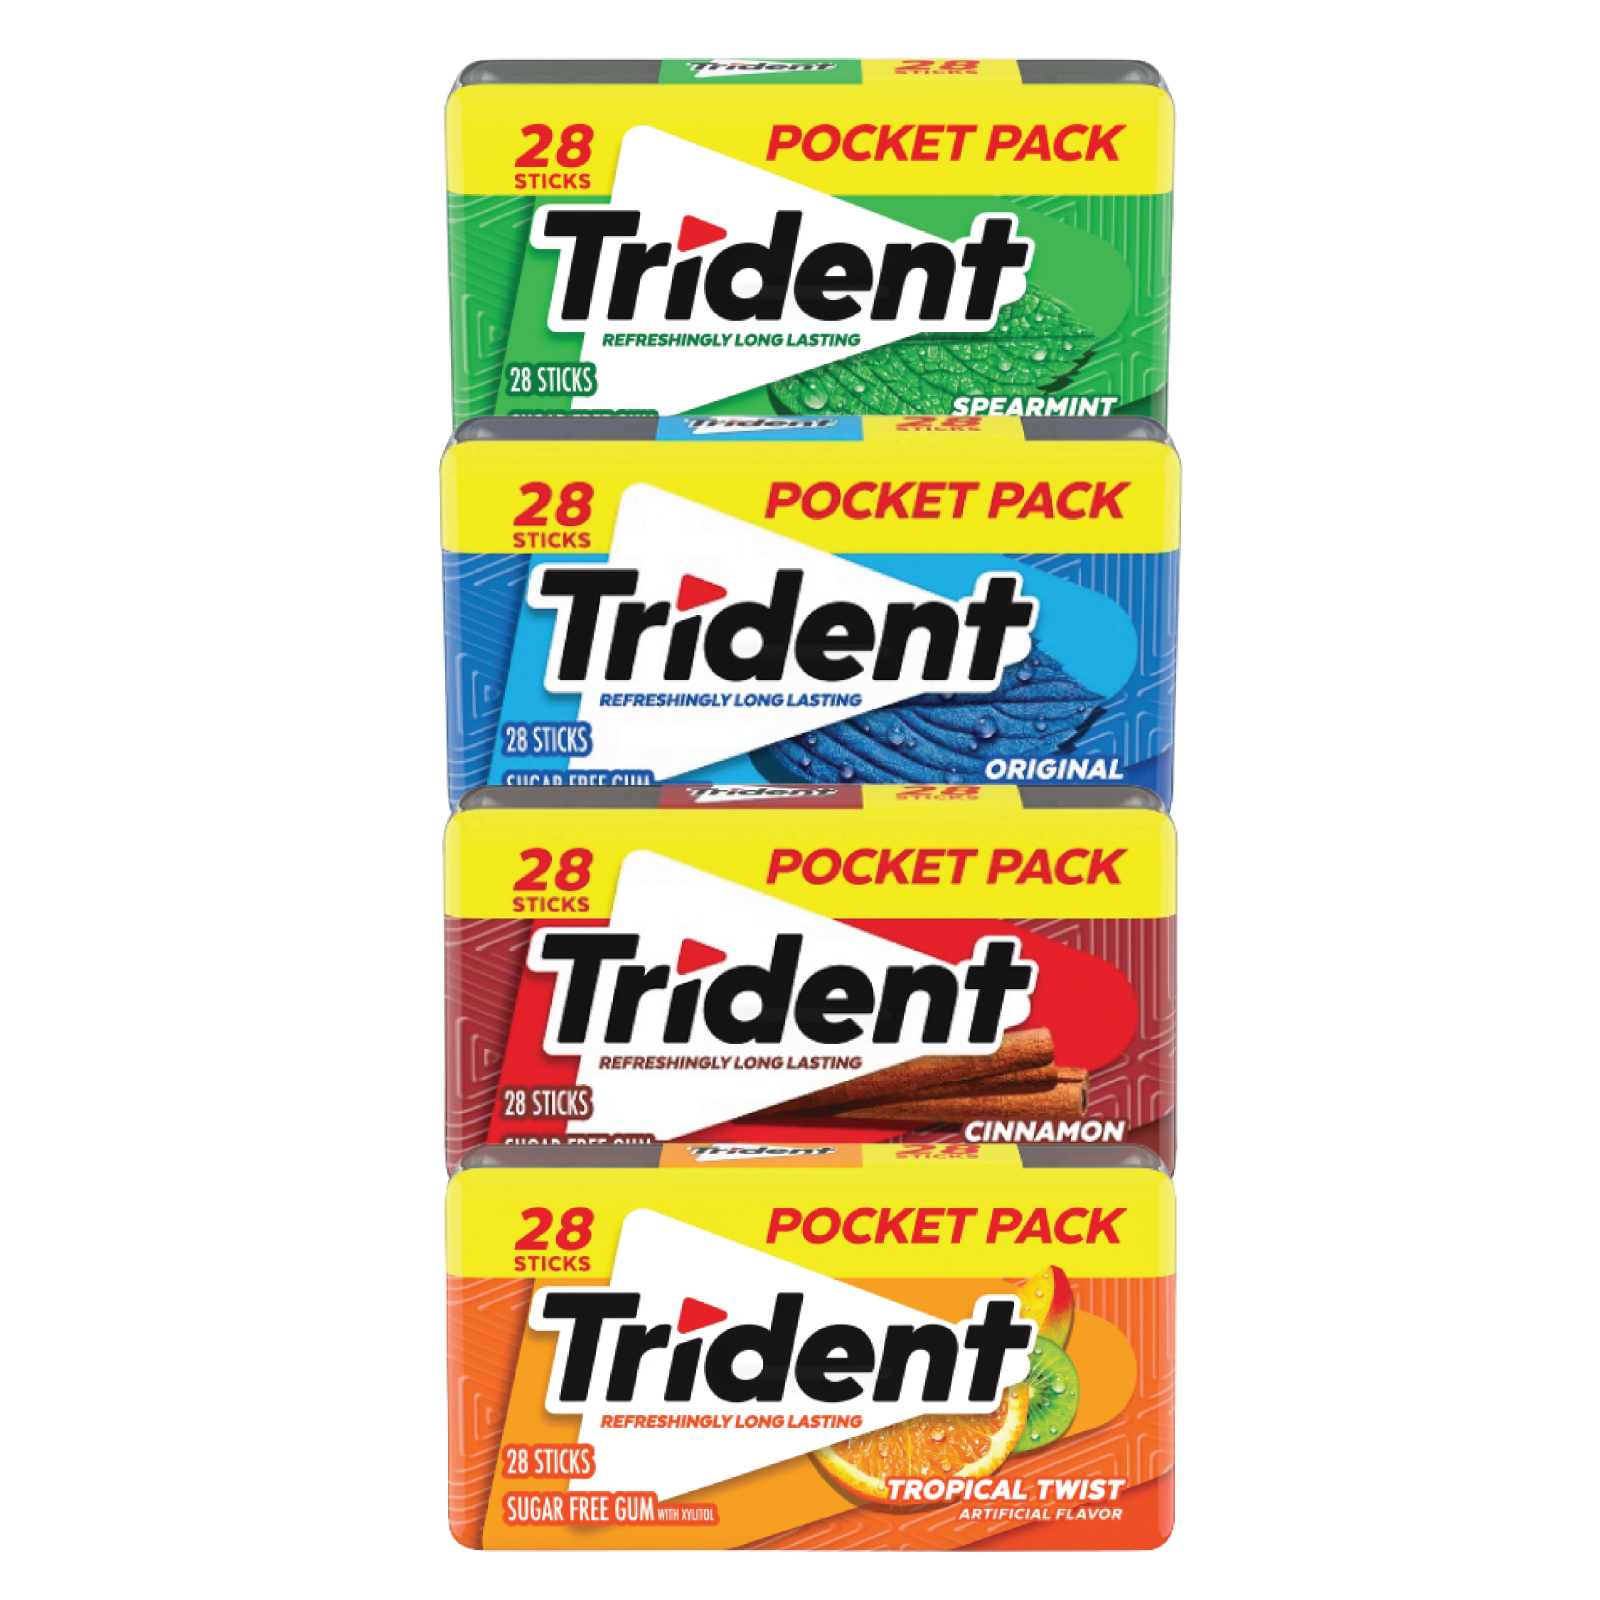 Trident Pocket Pack Variety Flavor Gum | 28 Sticks Per Pack | Mix & Match - $8.18 - $26.74